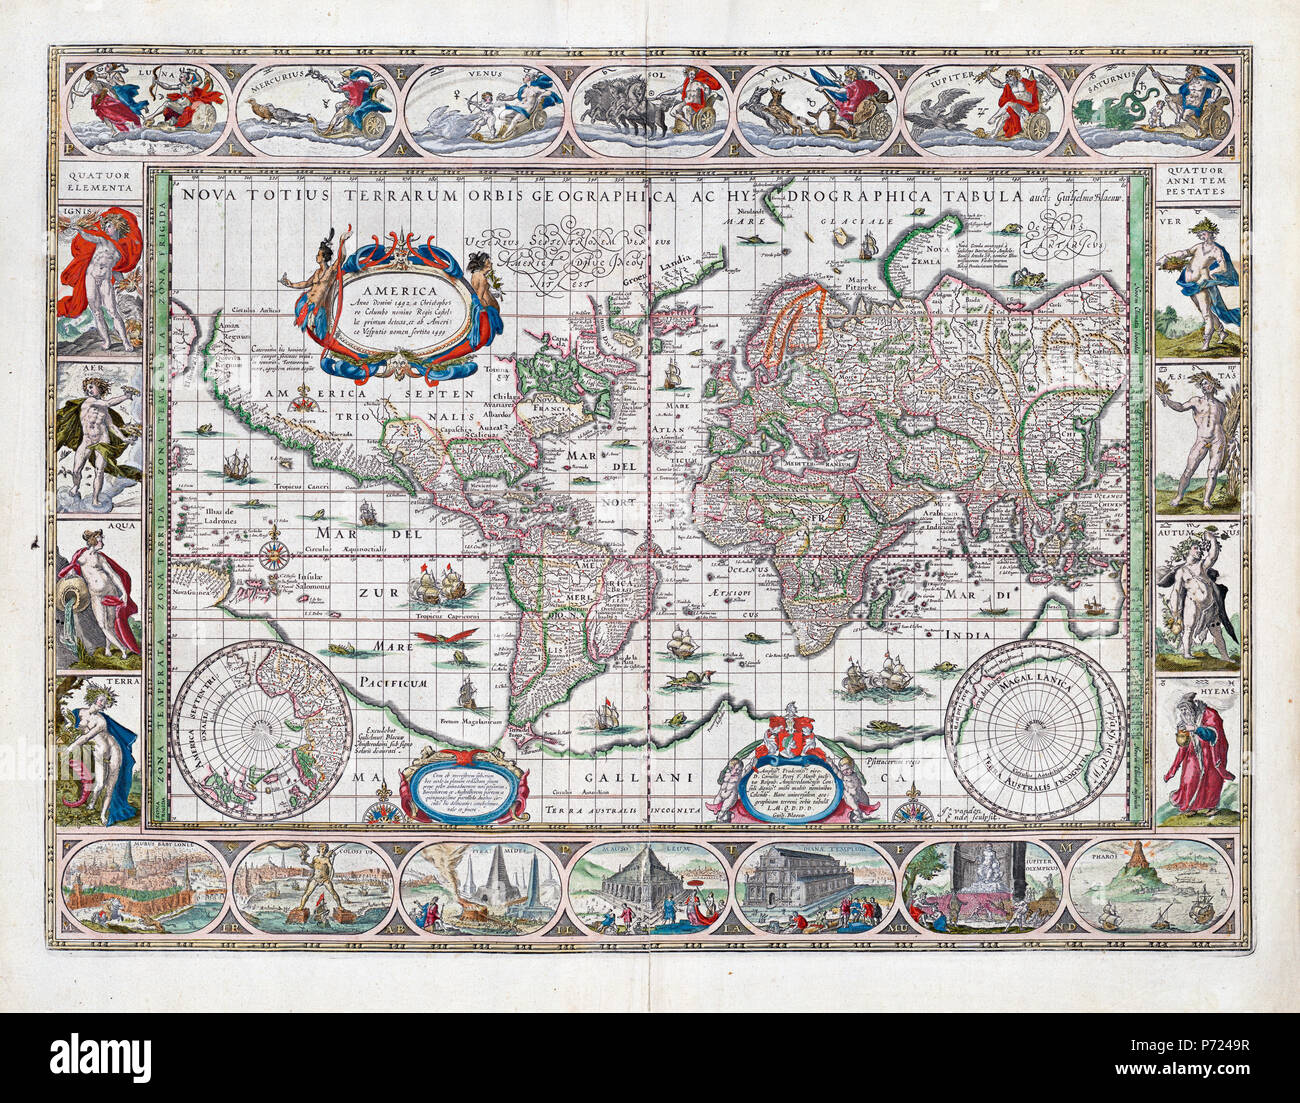 Blaeus verdenskart Guiljelmo, 1635 - Cartographe Blaeuw (Willem Blaeu) Banque D'Images